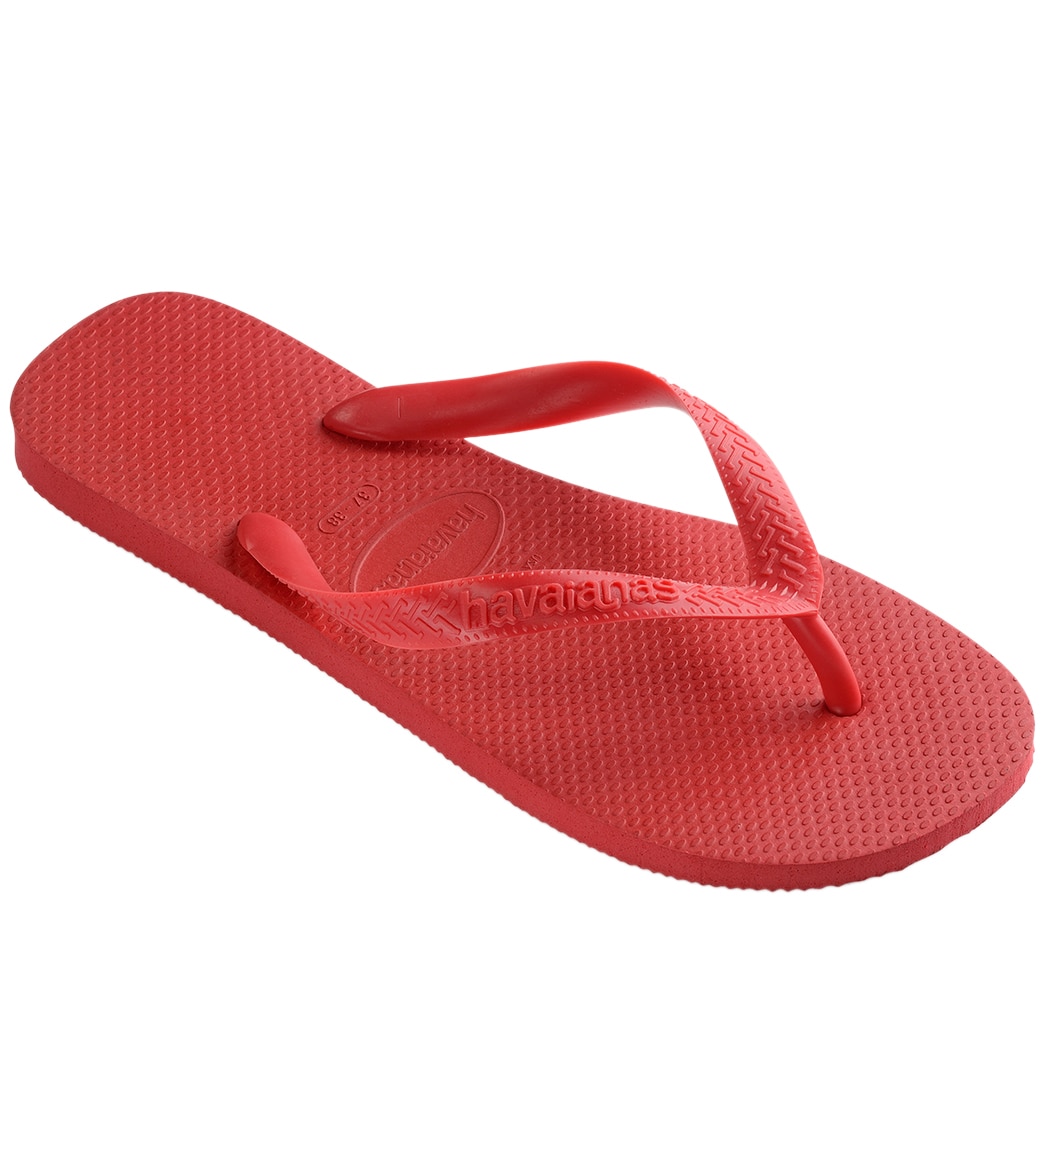 Havaianas Top Flip Flop - Ruby Red 35/36 - Swimoutlet.com